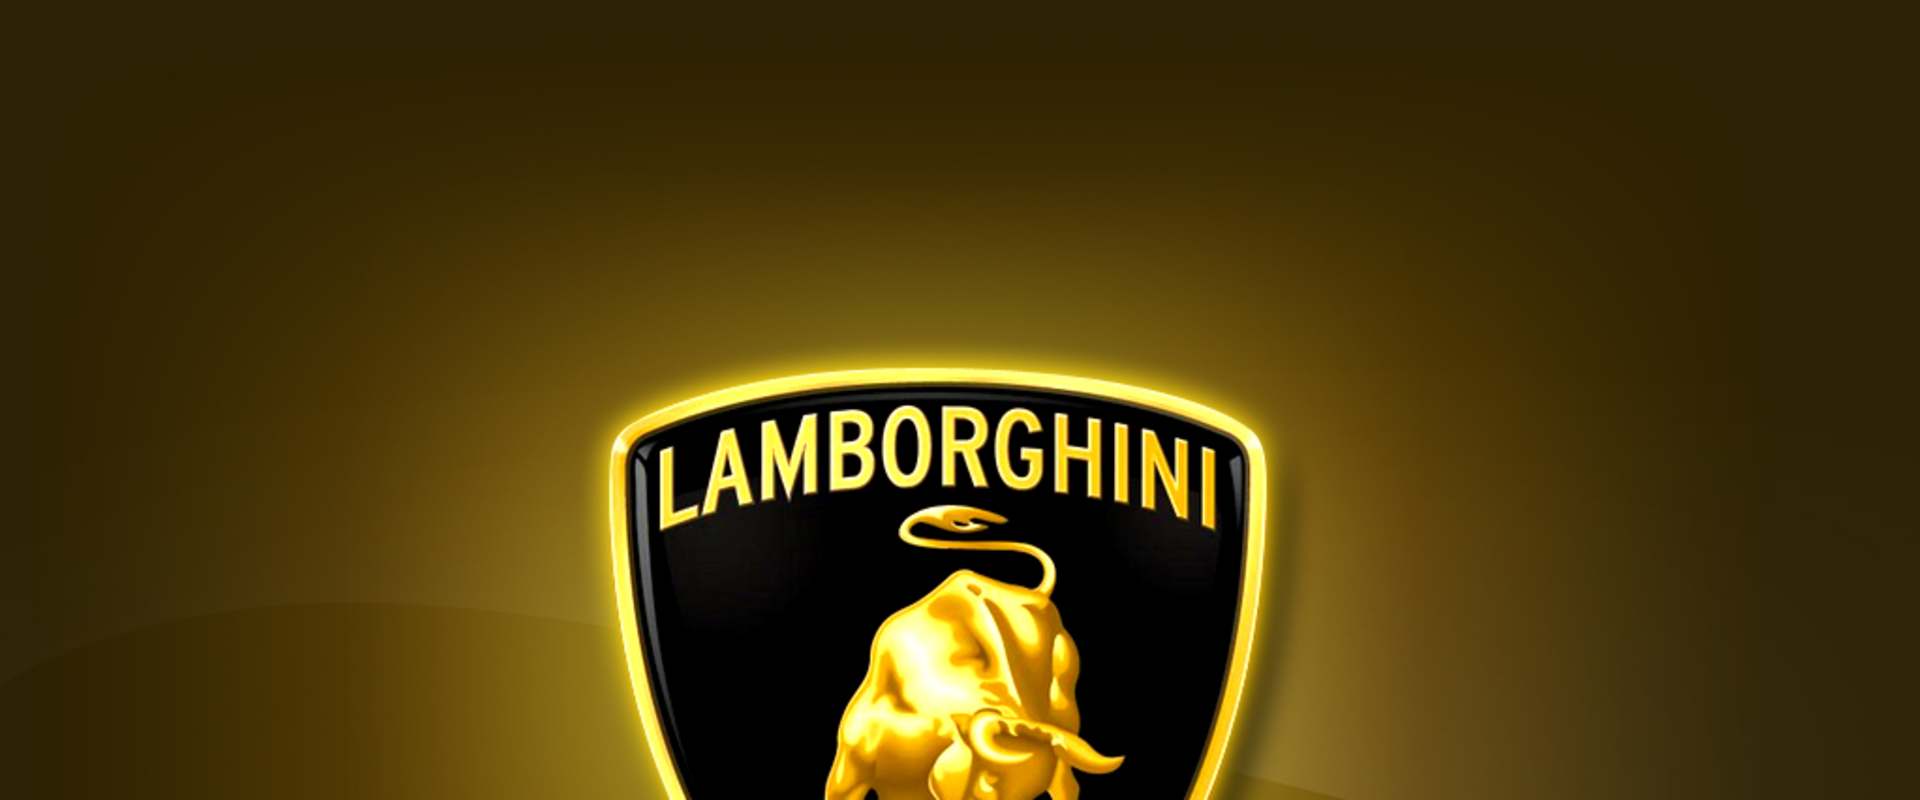 Lamborghini: The Man Behind the Legend background 2